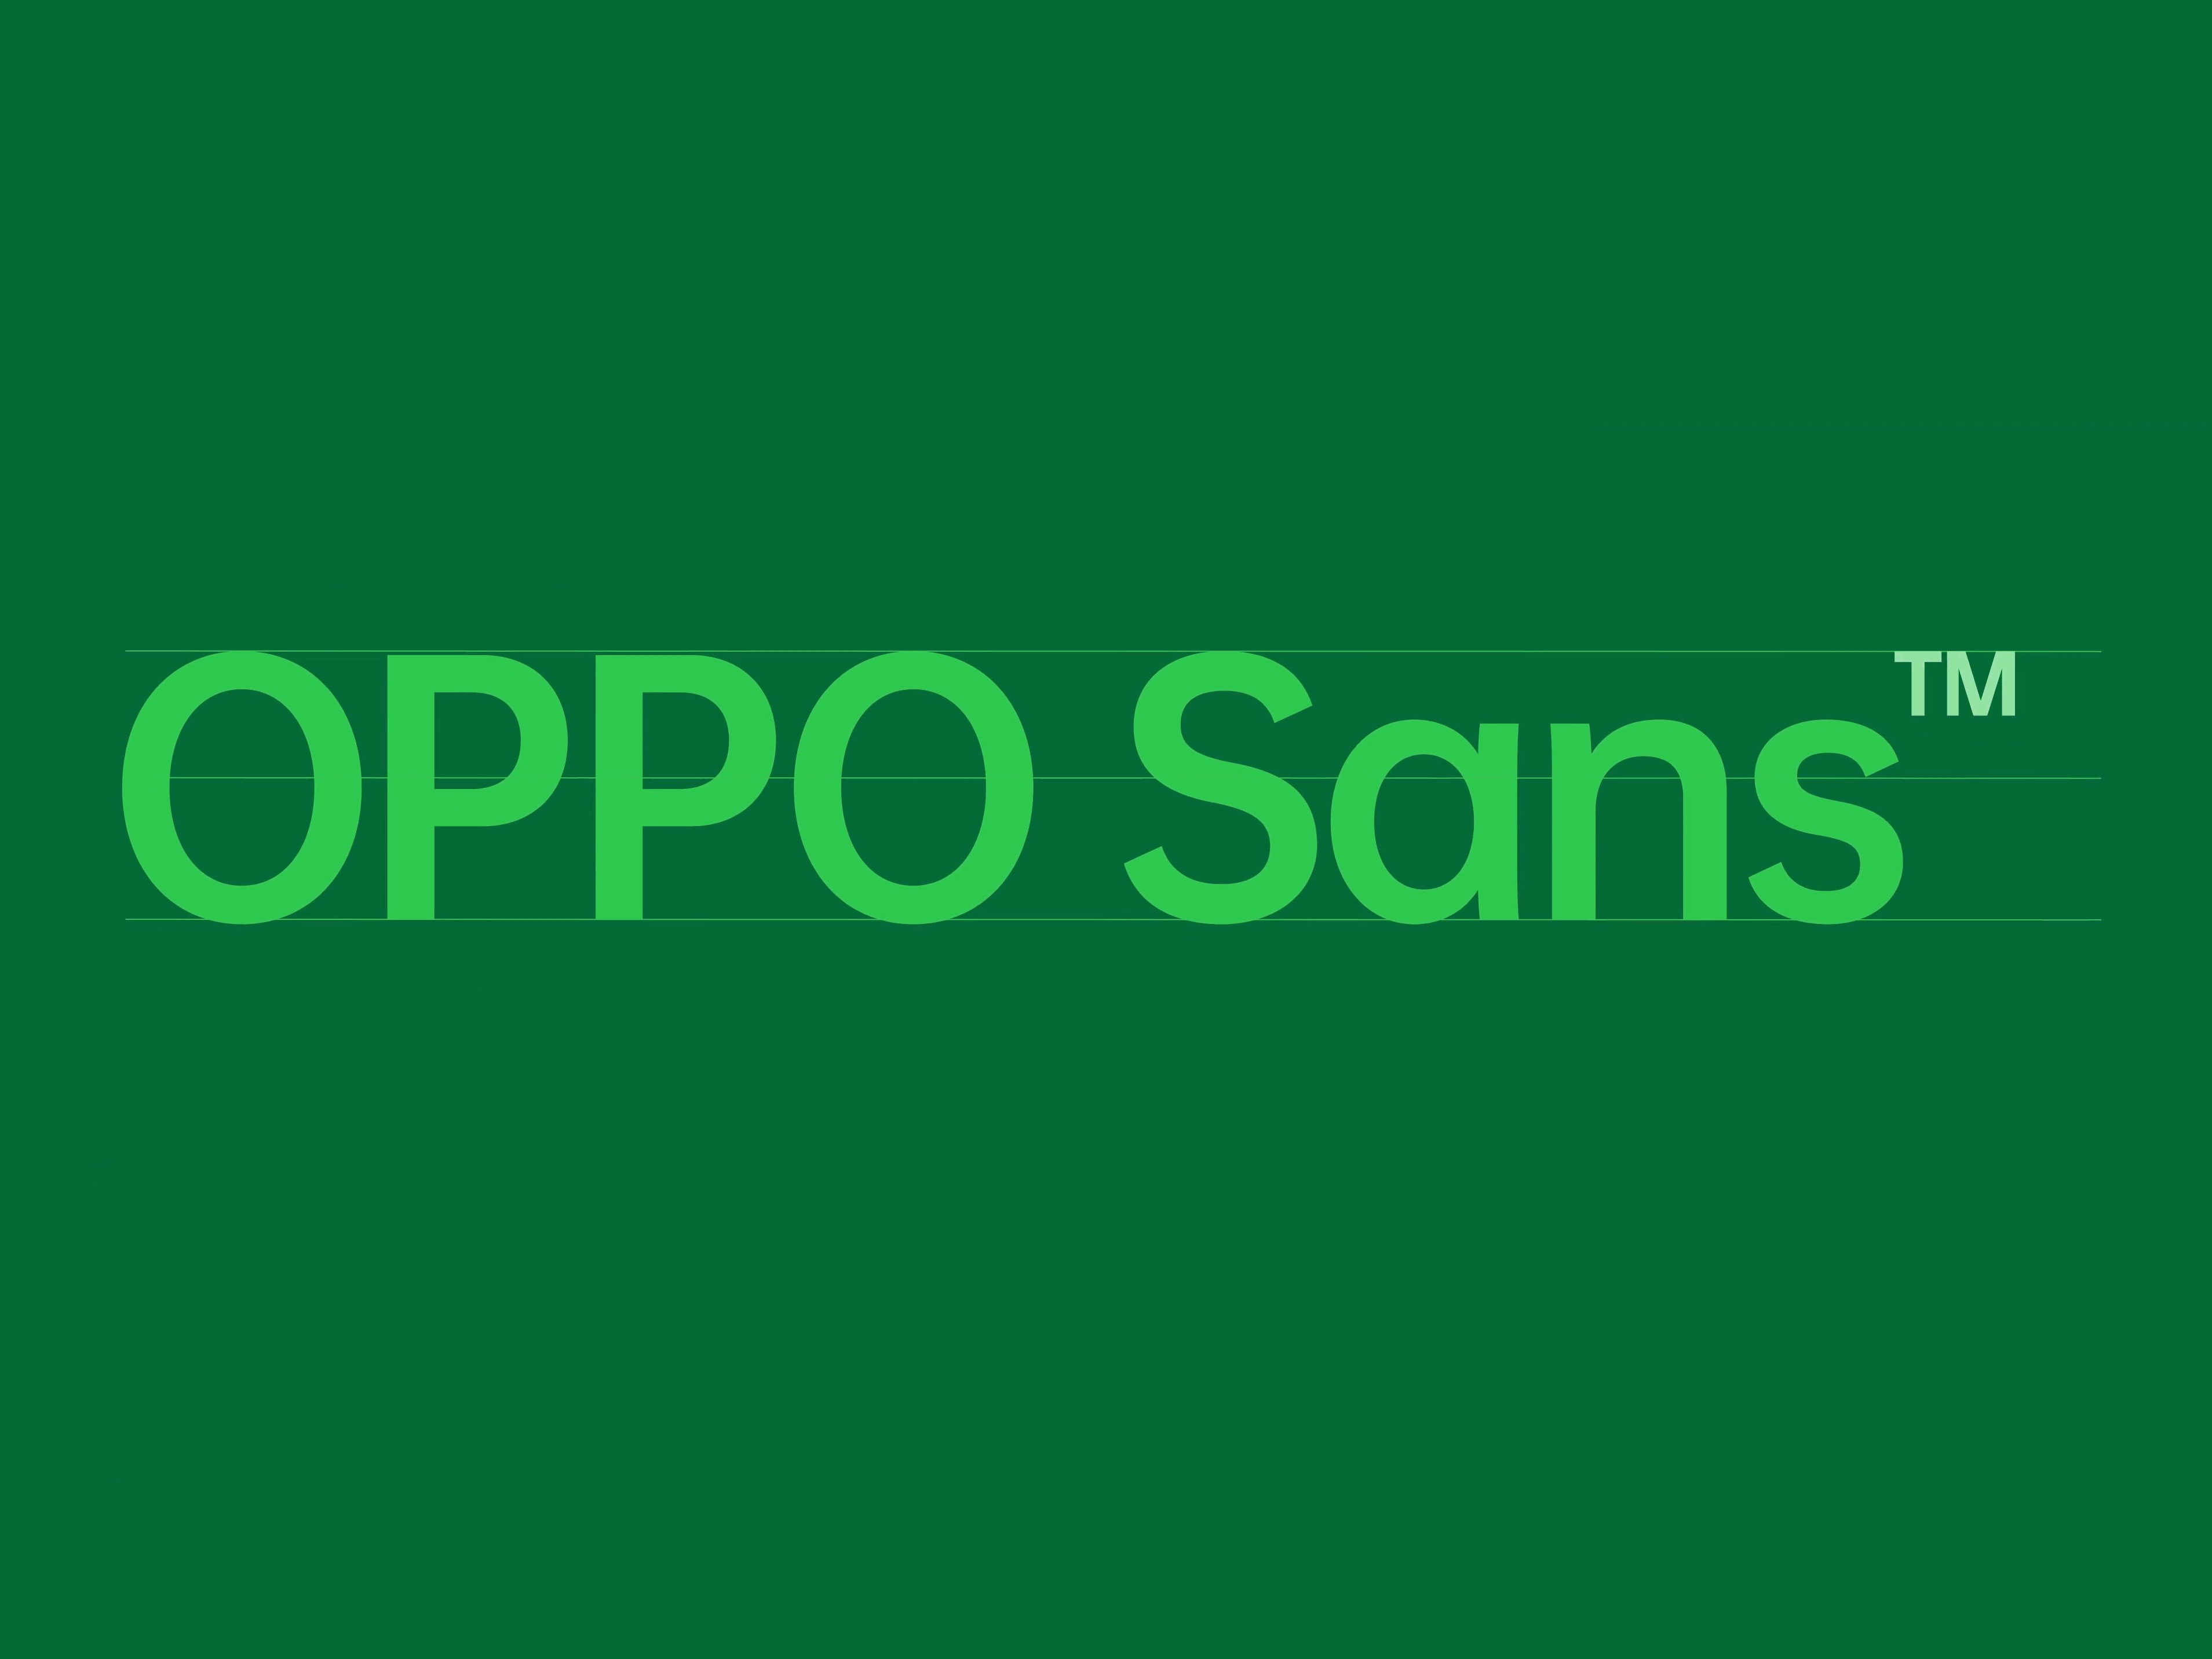 OPPO Sans 全新品牌定制字体